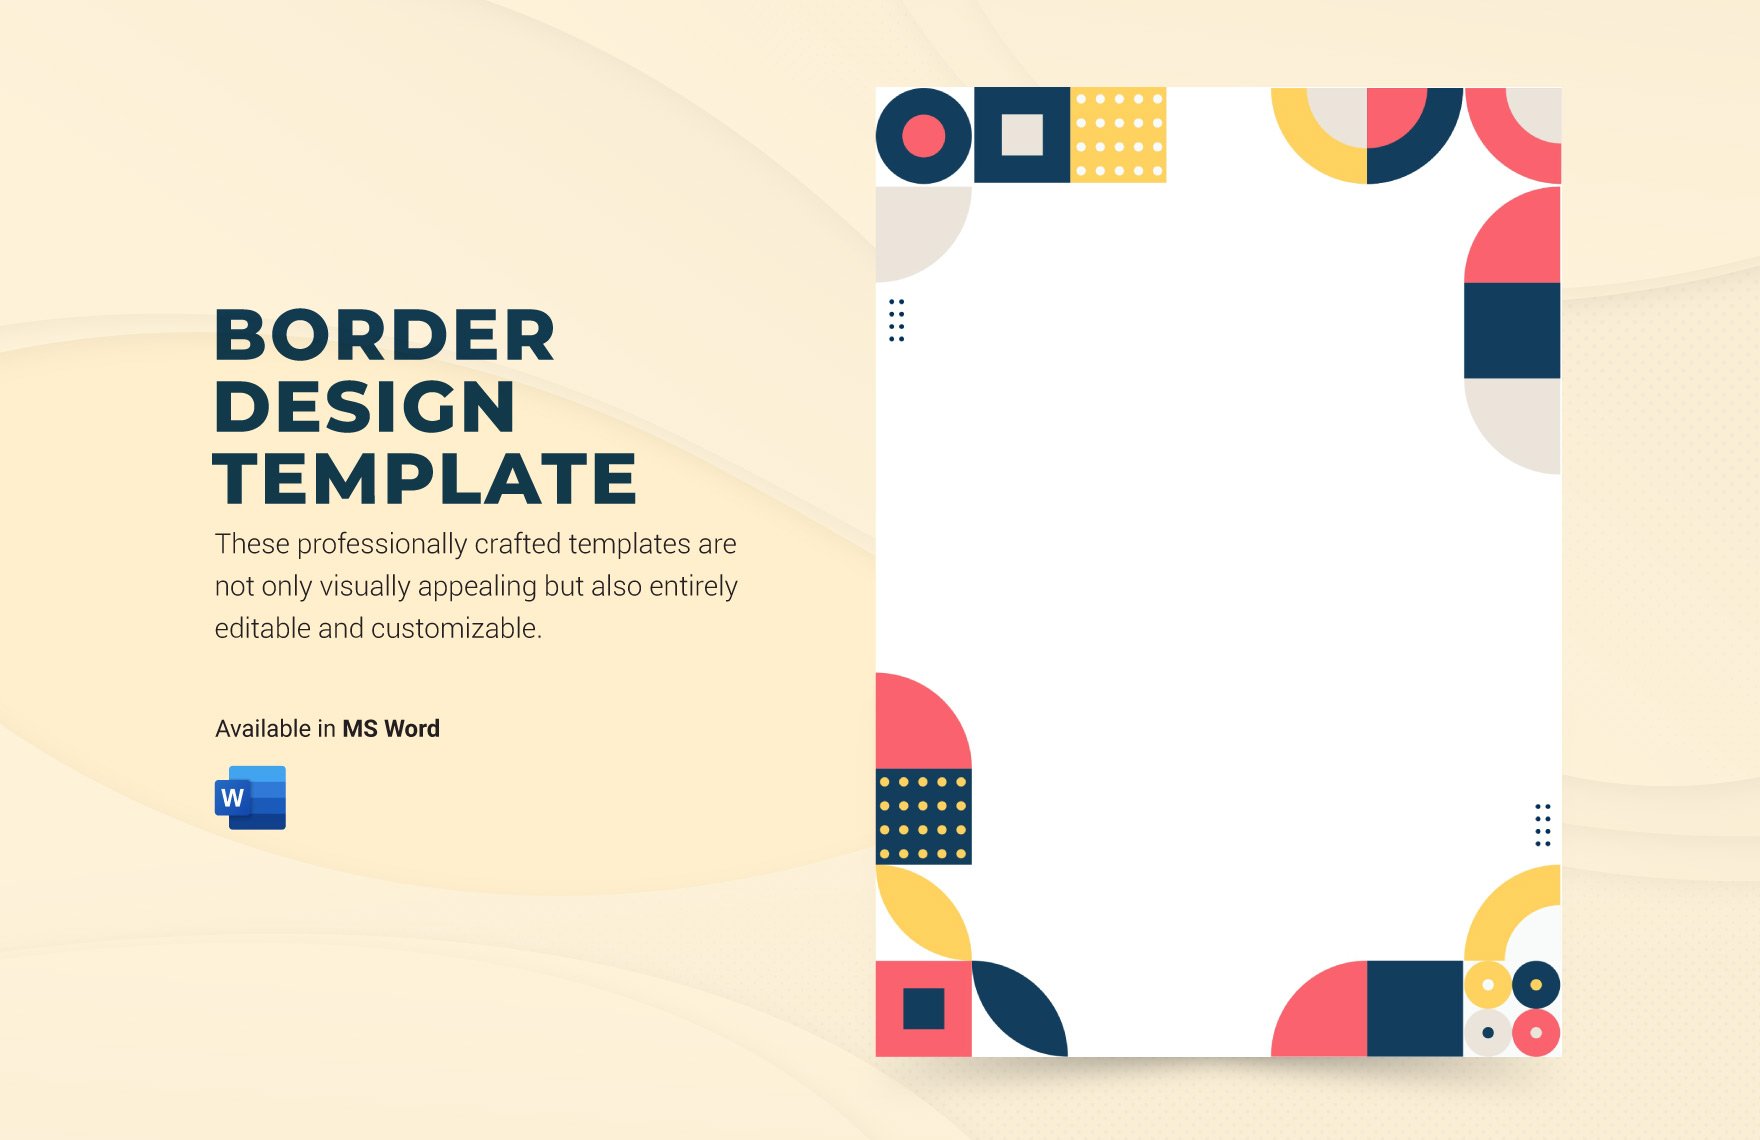 Border Design Template in Word